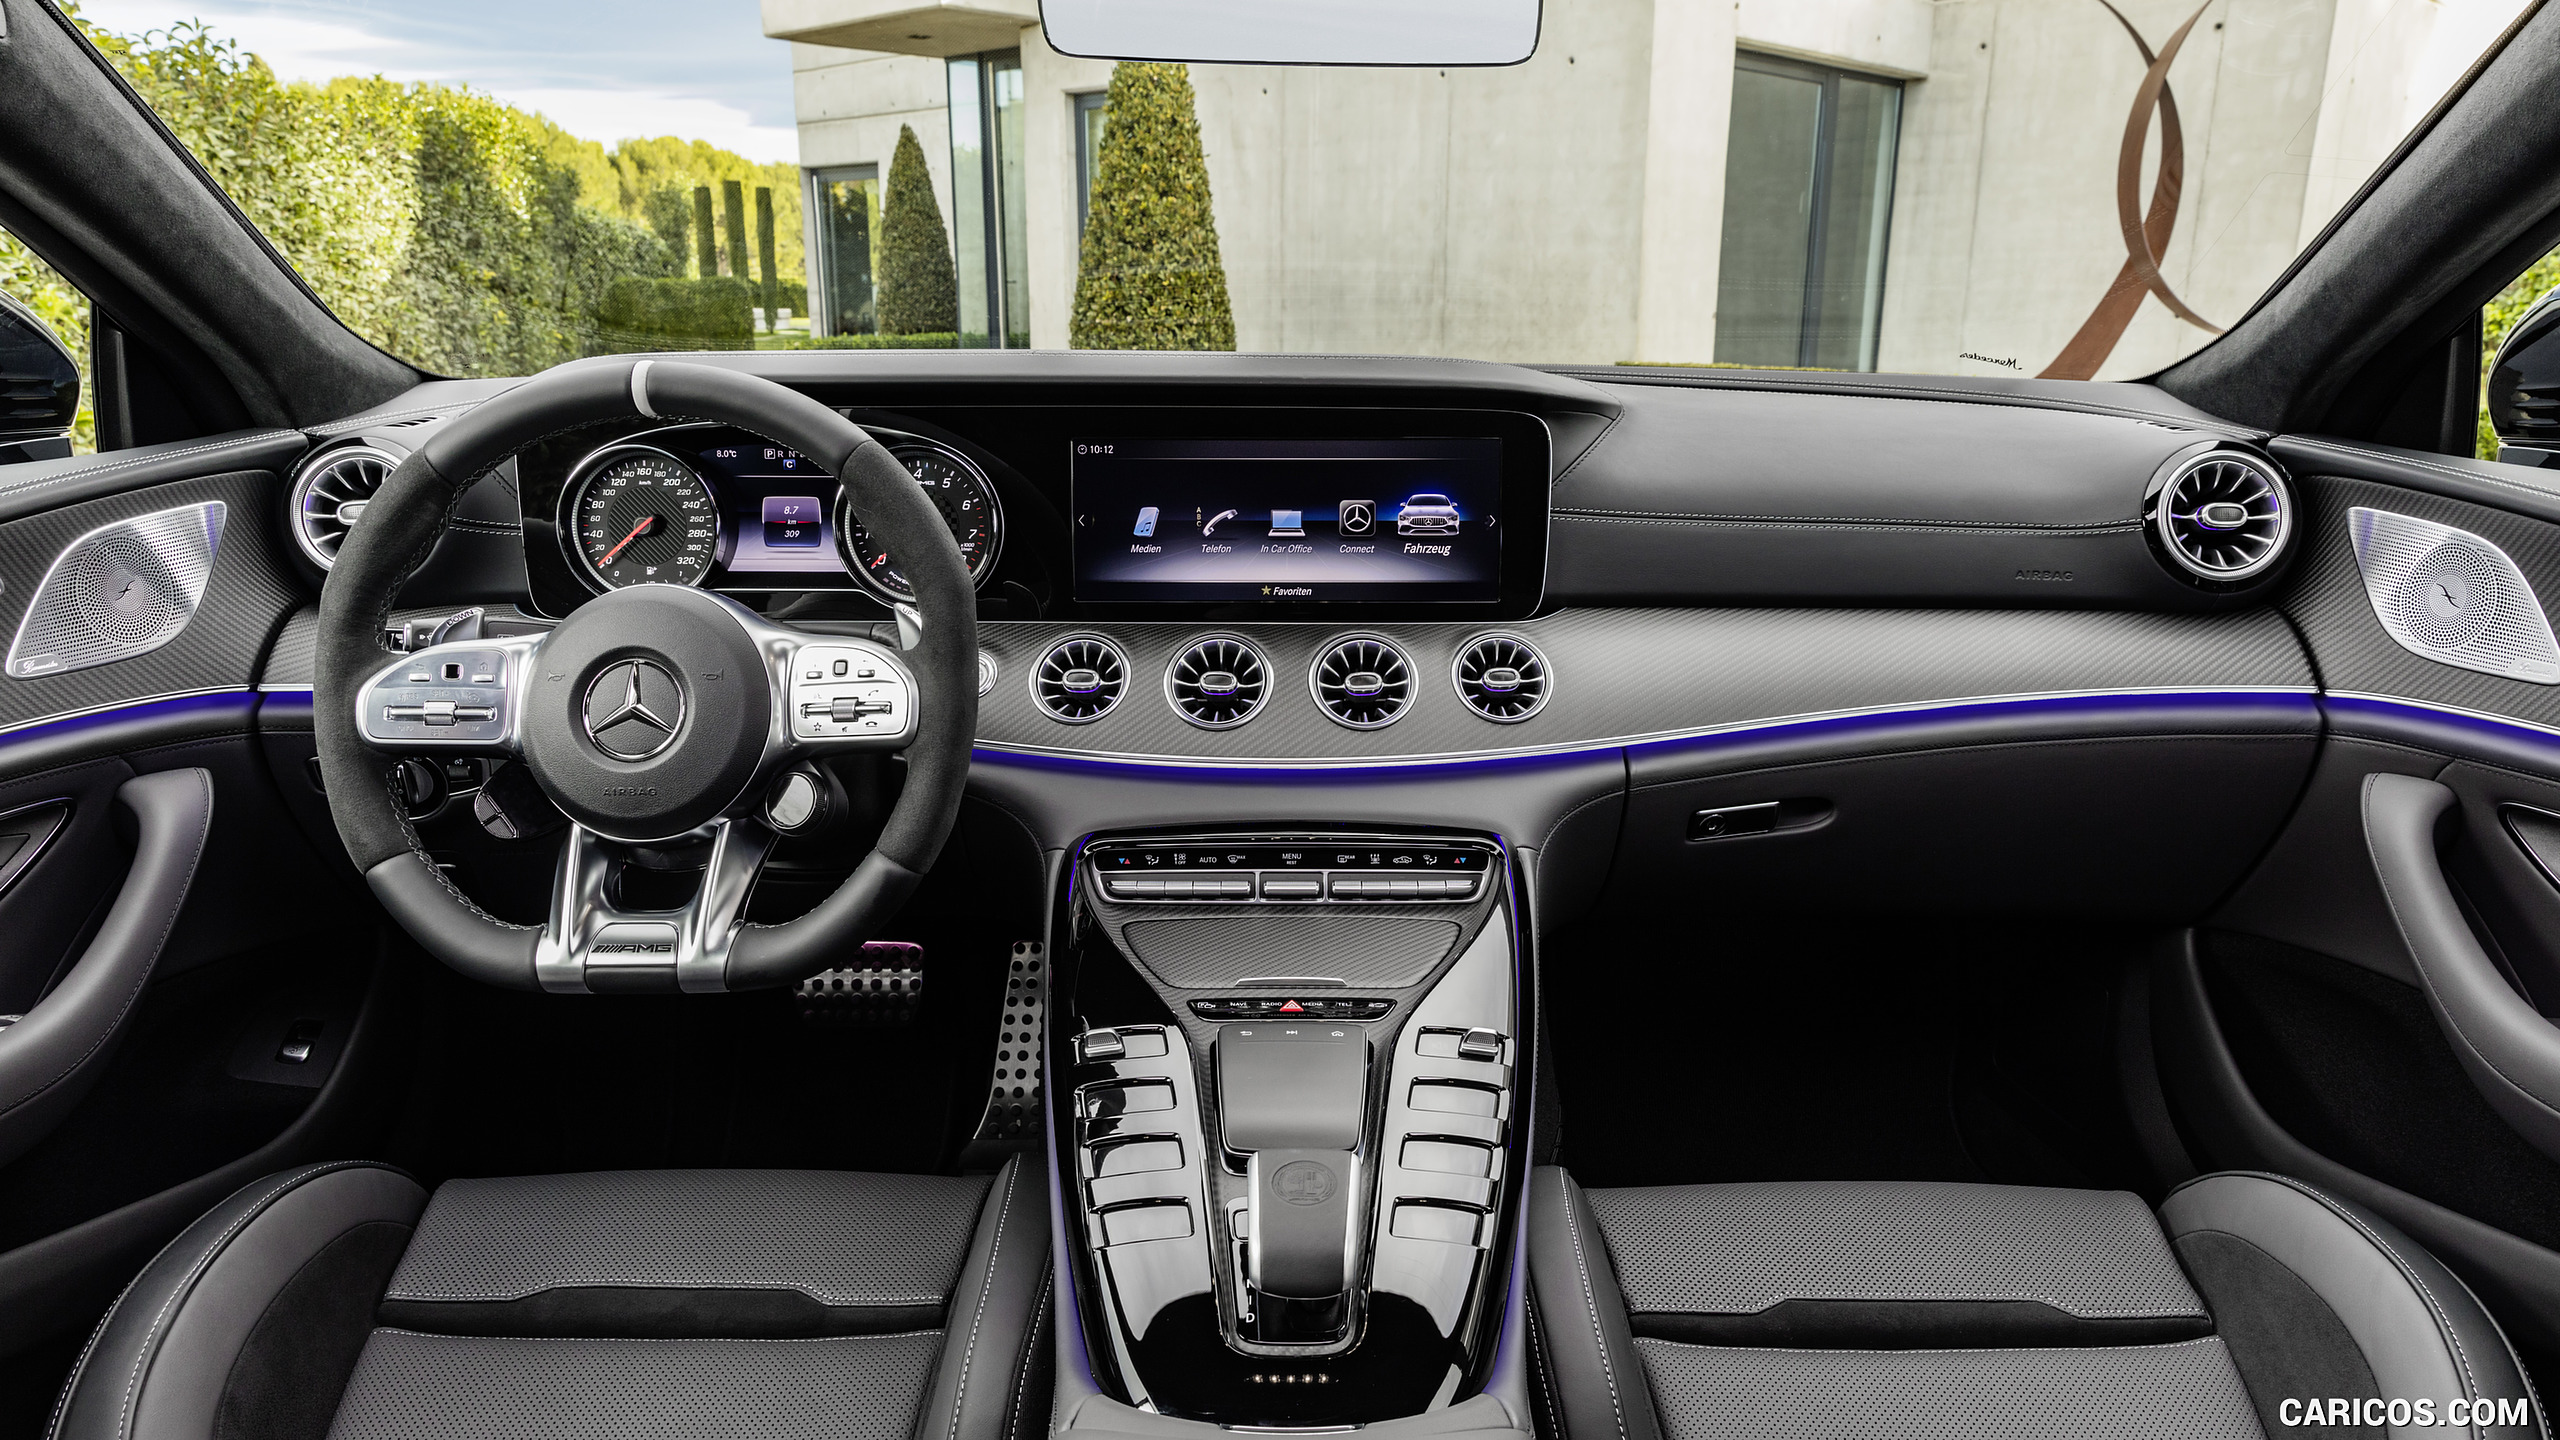 2019 Mercedes-AMG GT 53 4MATIC+ 4-Door Coupe - Interior, Cockpit, #69 of 427